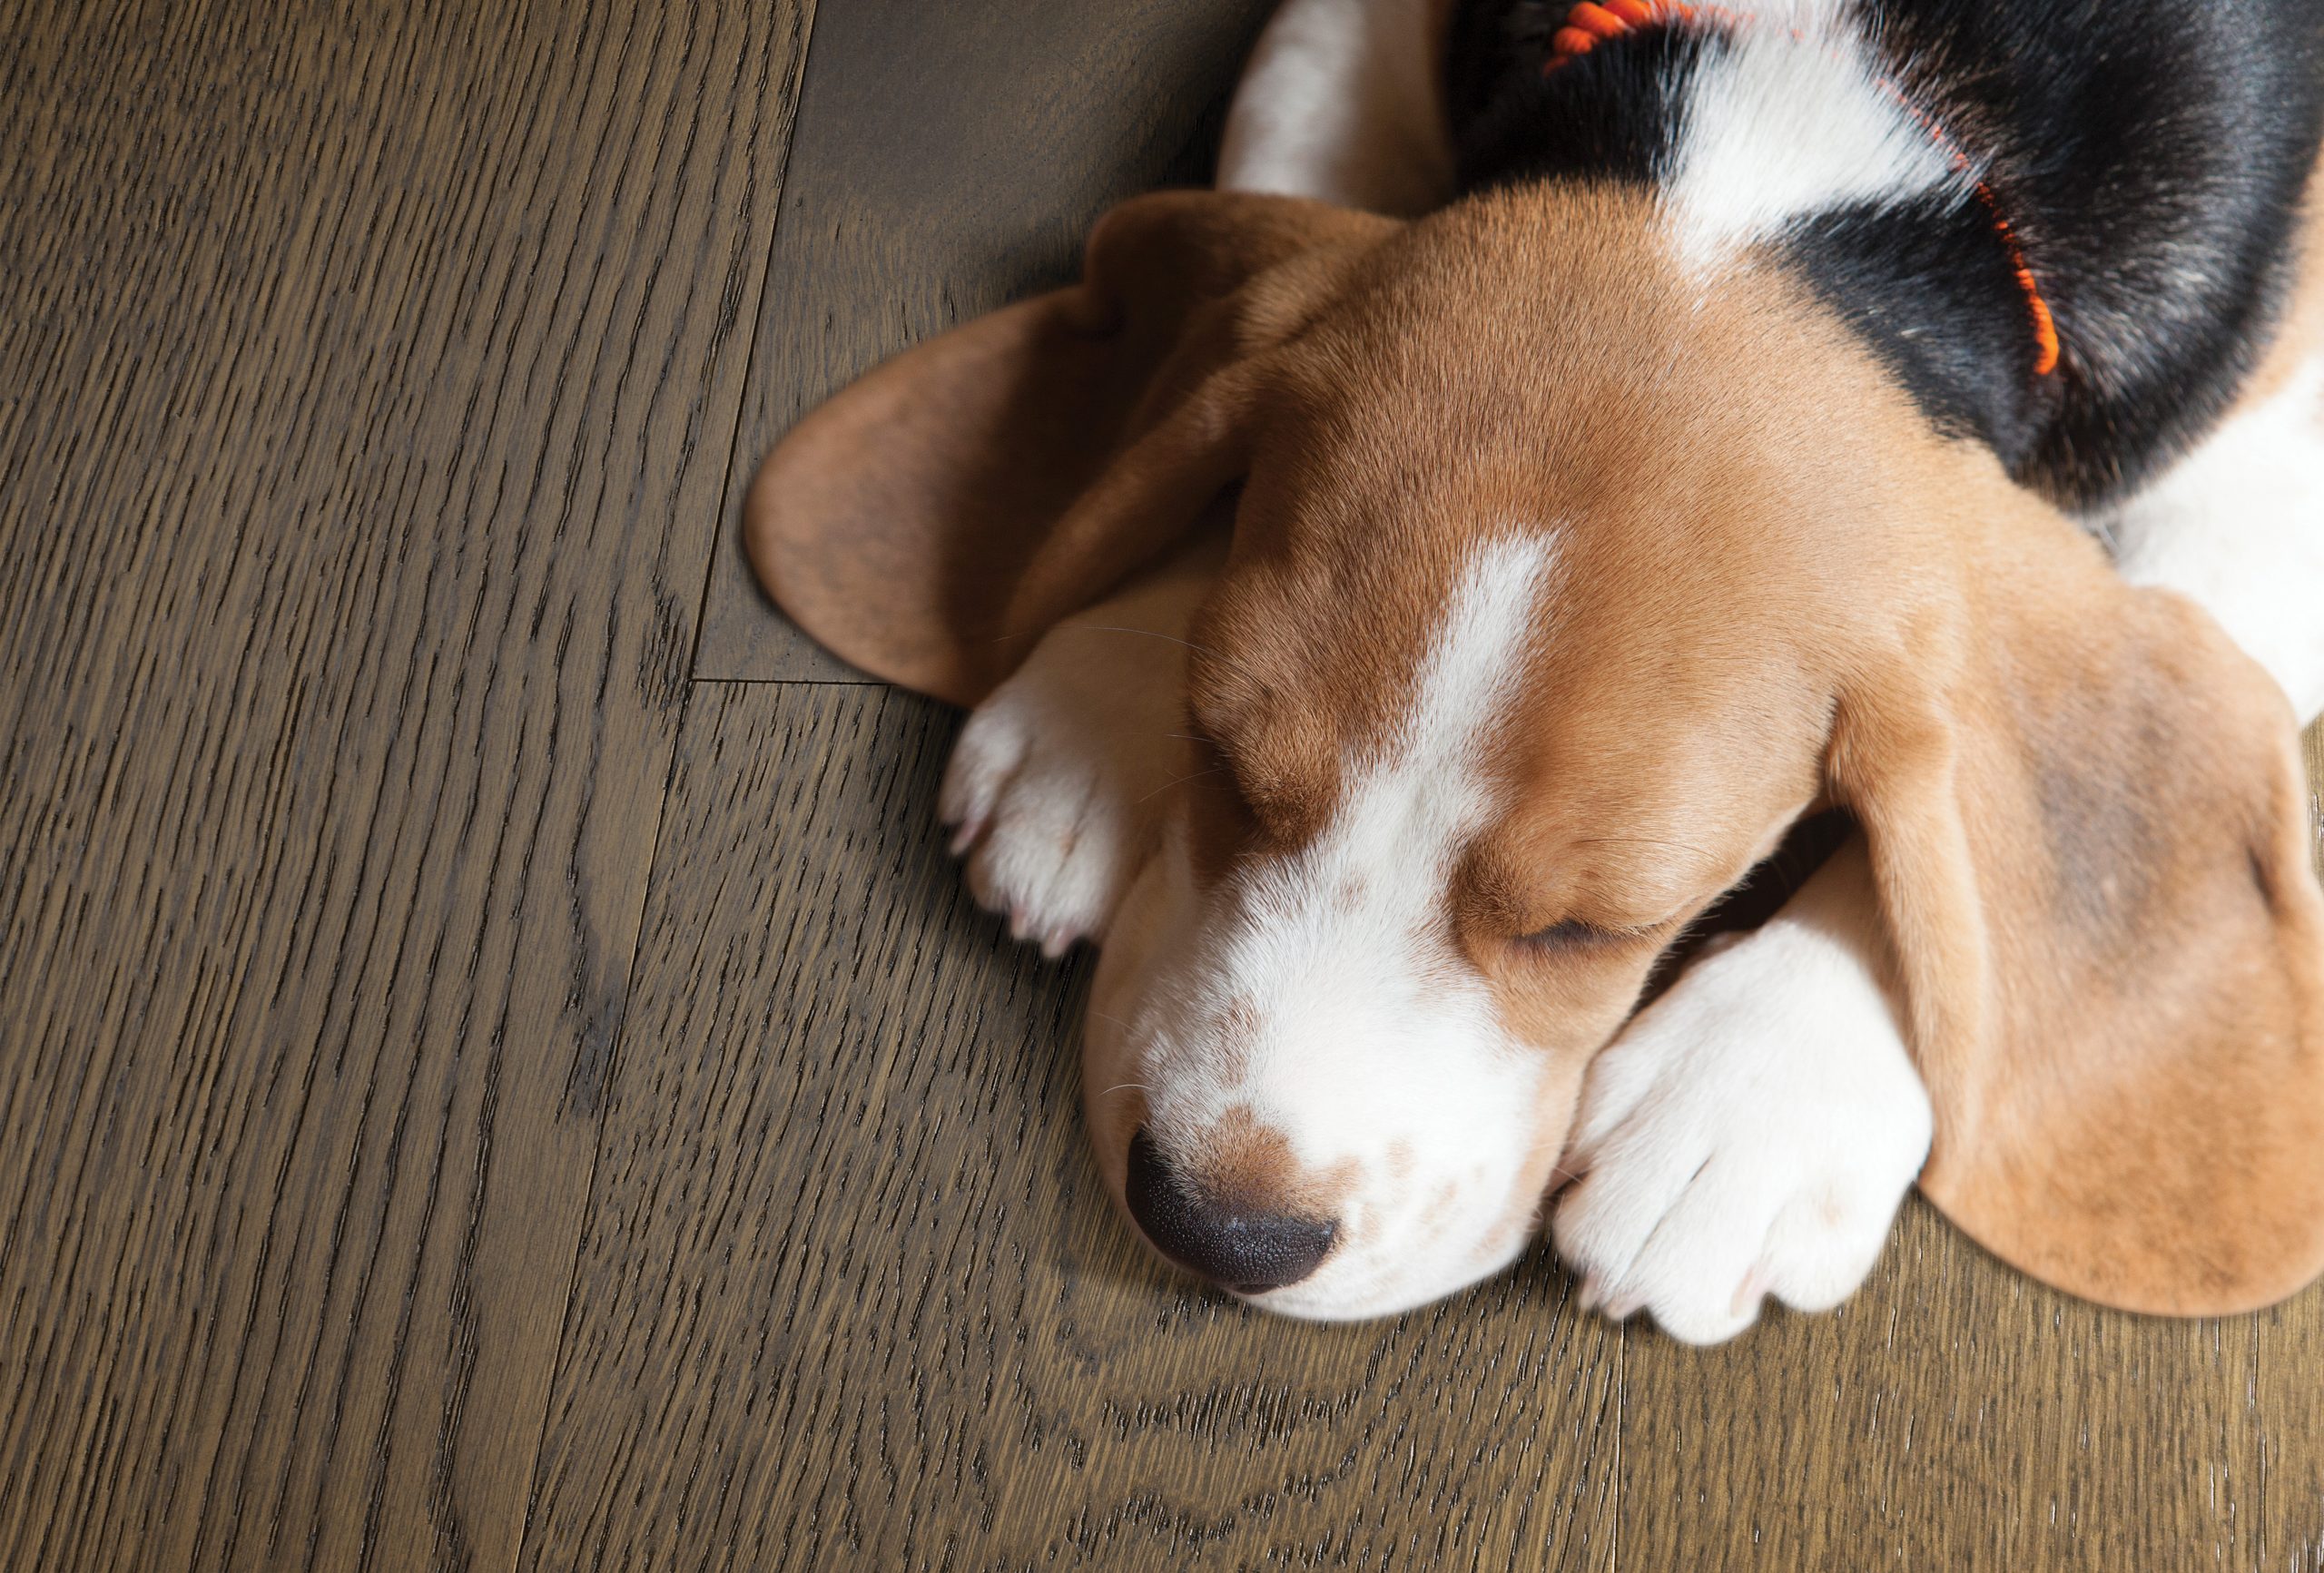 are engineered hardwood floors good for dogs